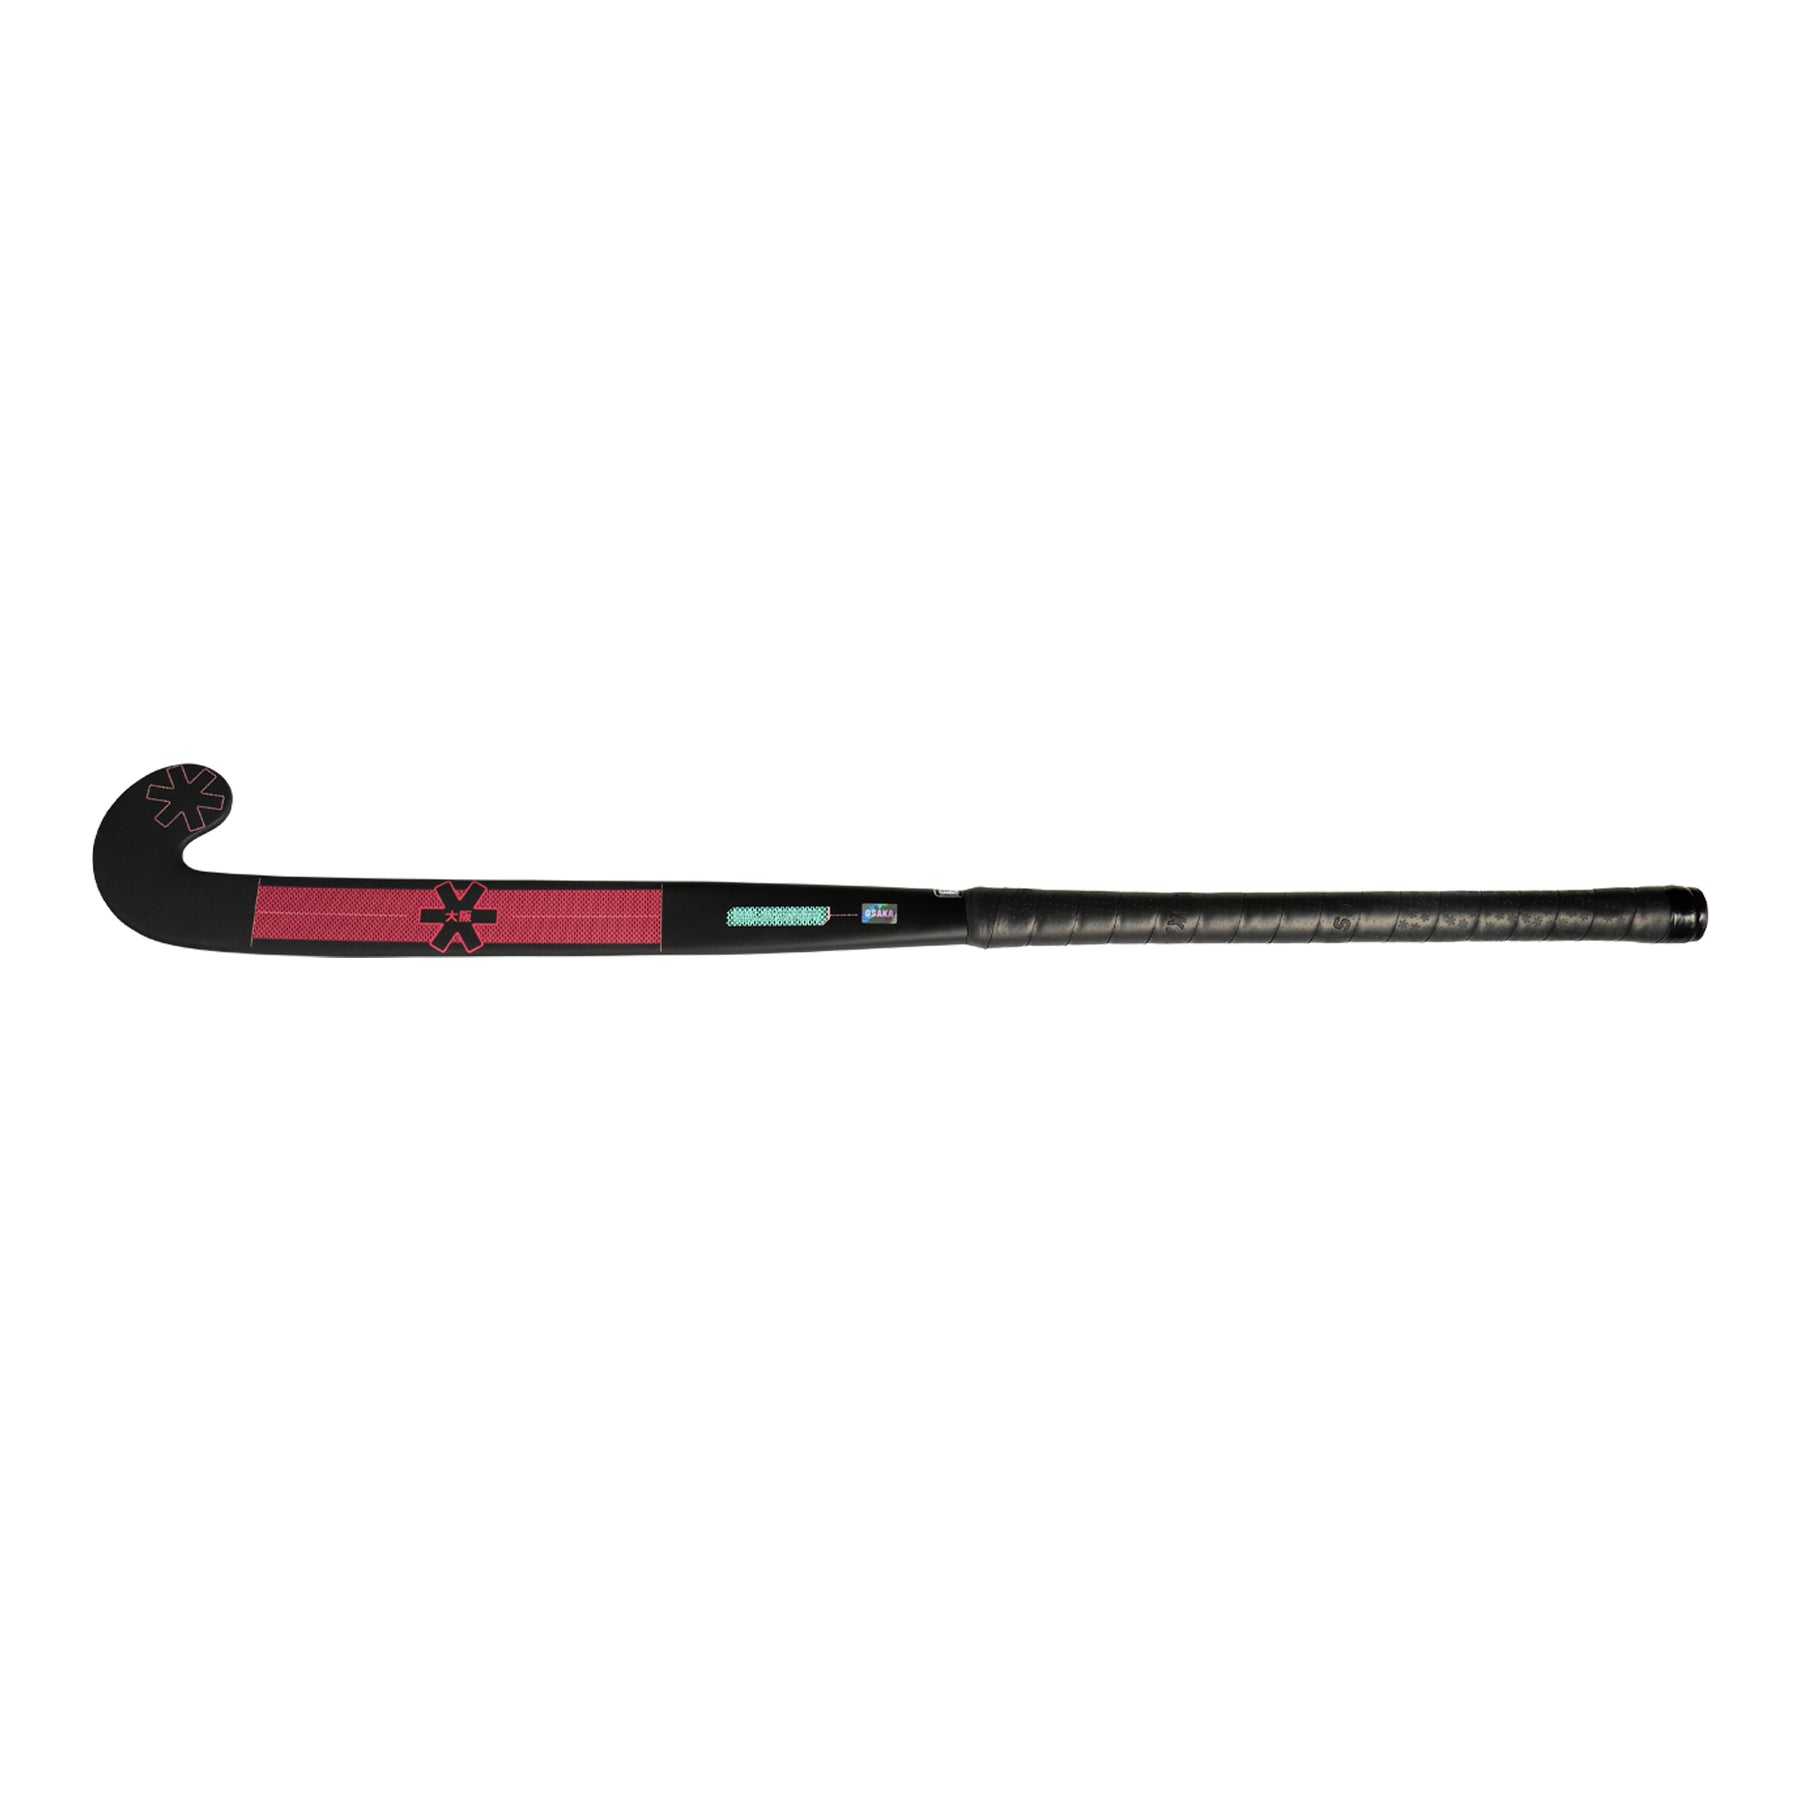 Osaka Vision 25 Show Bow Hockey Stick 2023: Carbon Pink